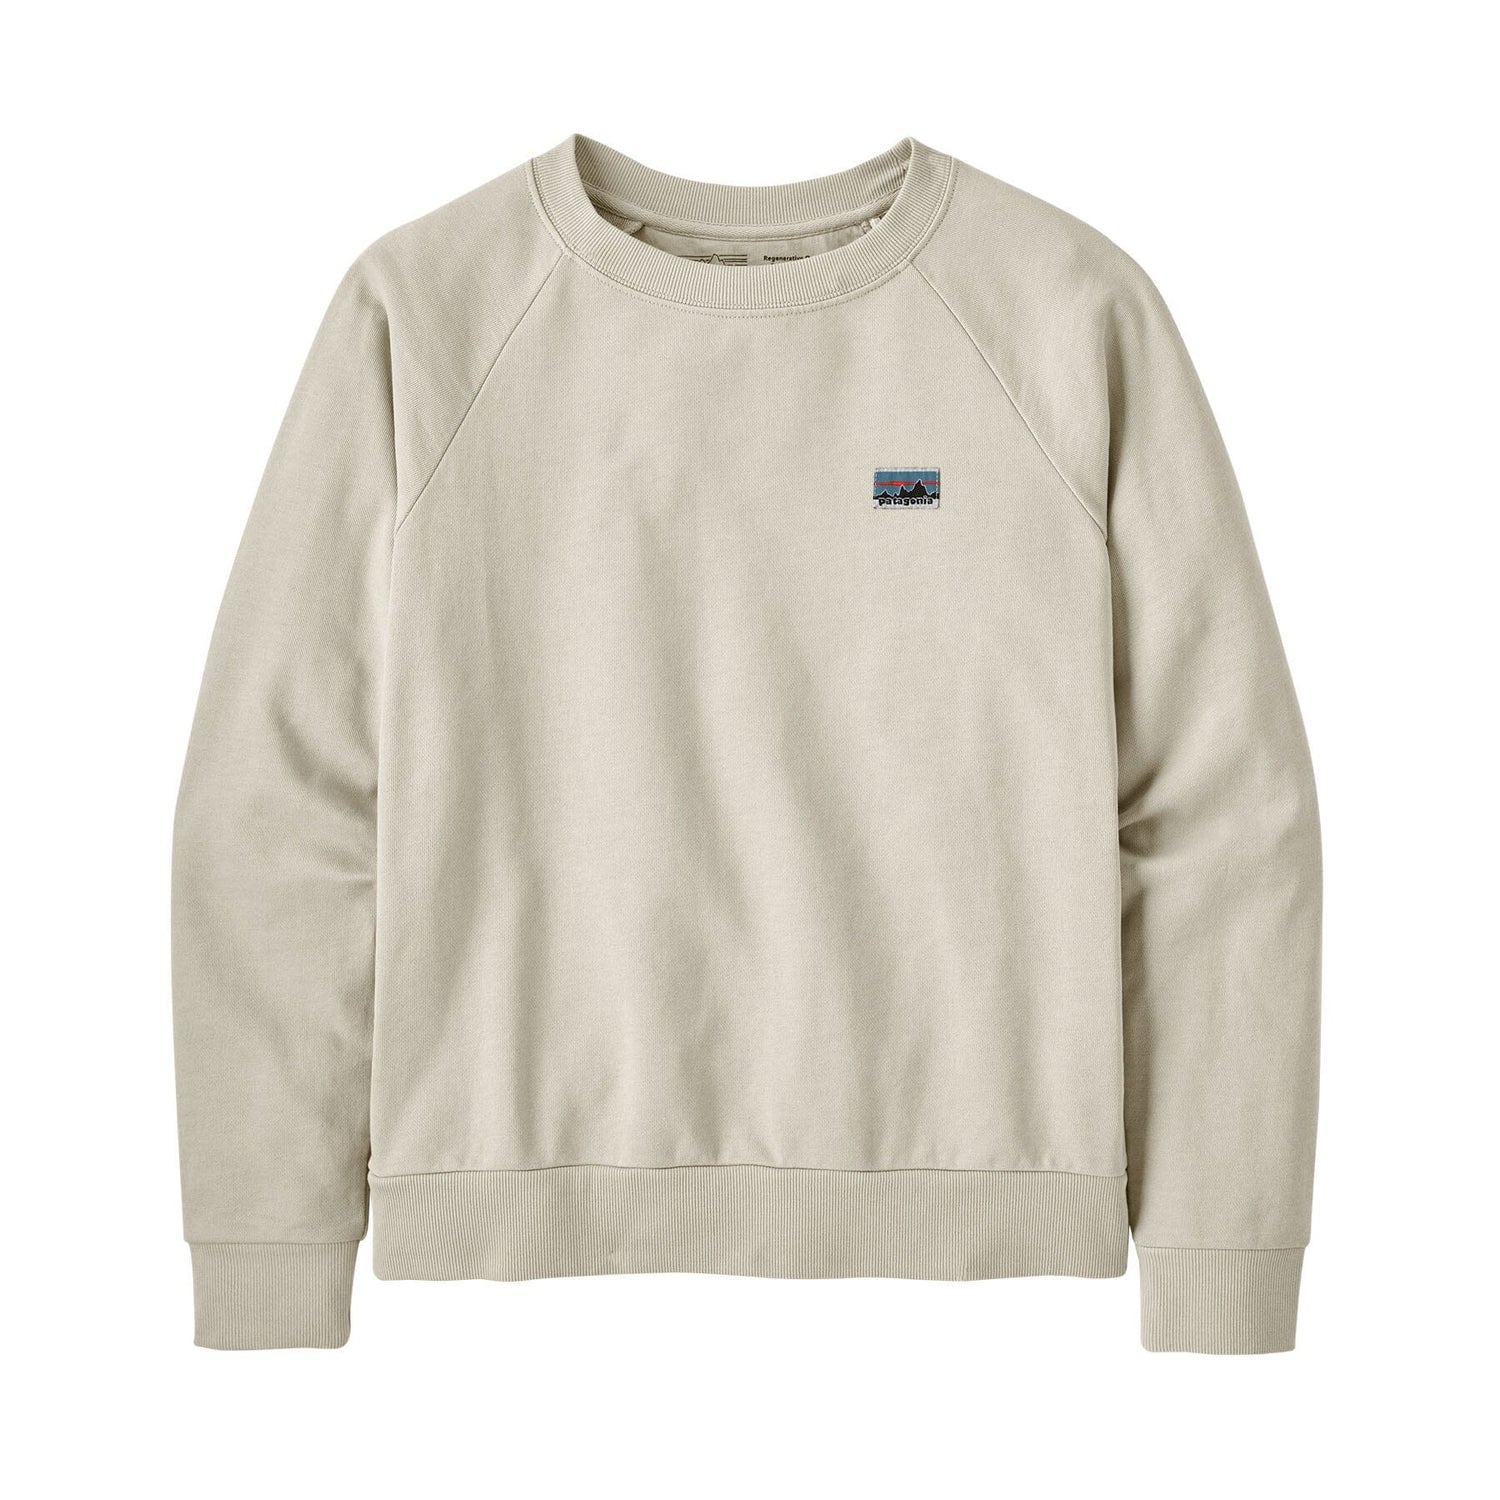 Patagonia W's Essential Sweatshirt - Regenerative Organic Certified Cotton Wool White Shirt